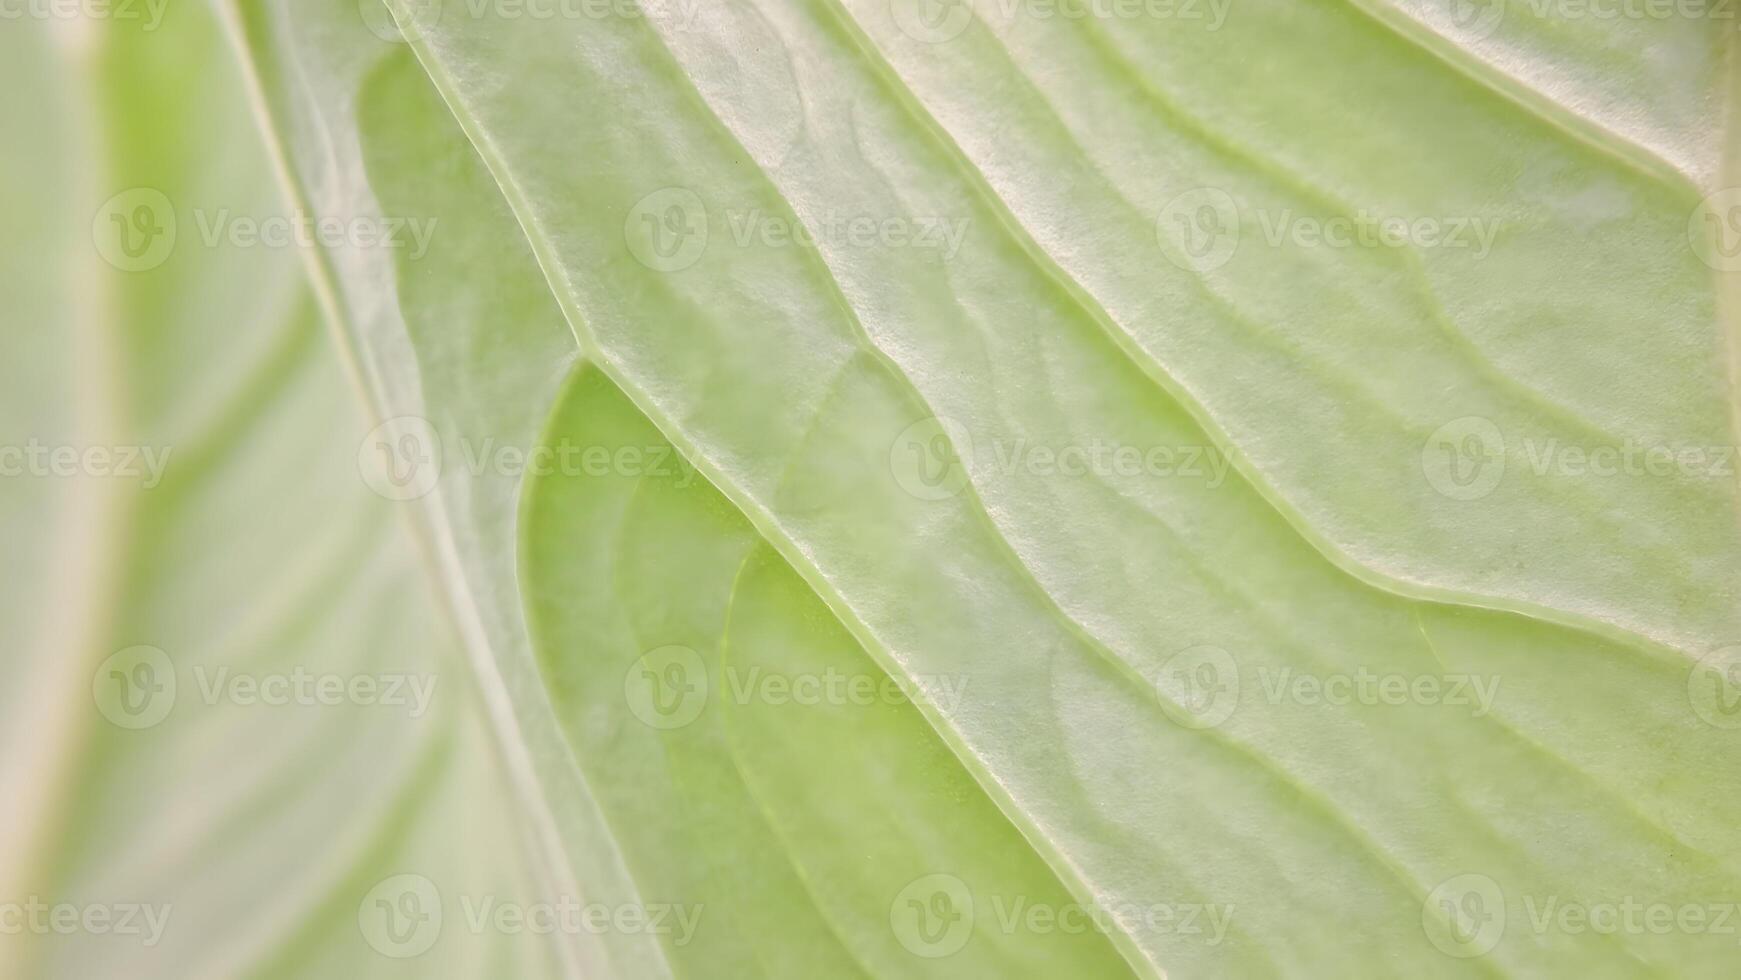 verde plantar folha textura foto